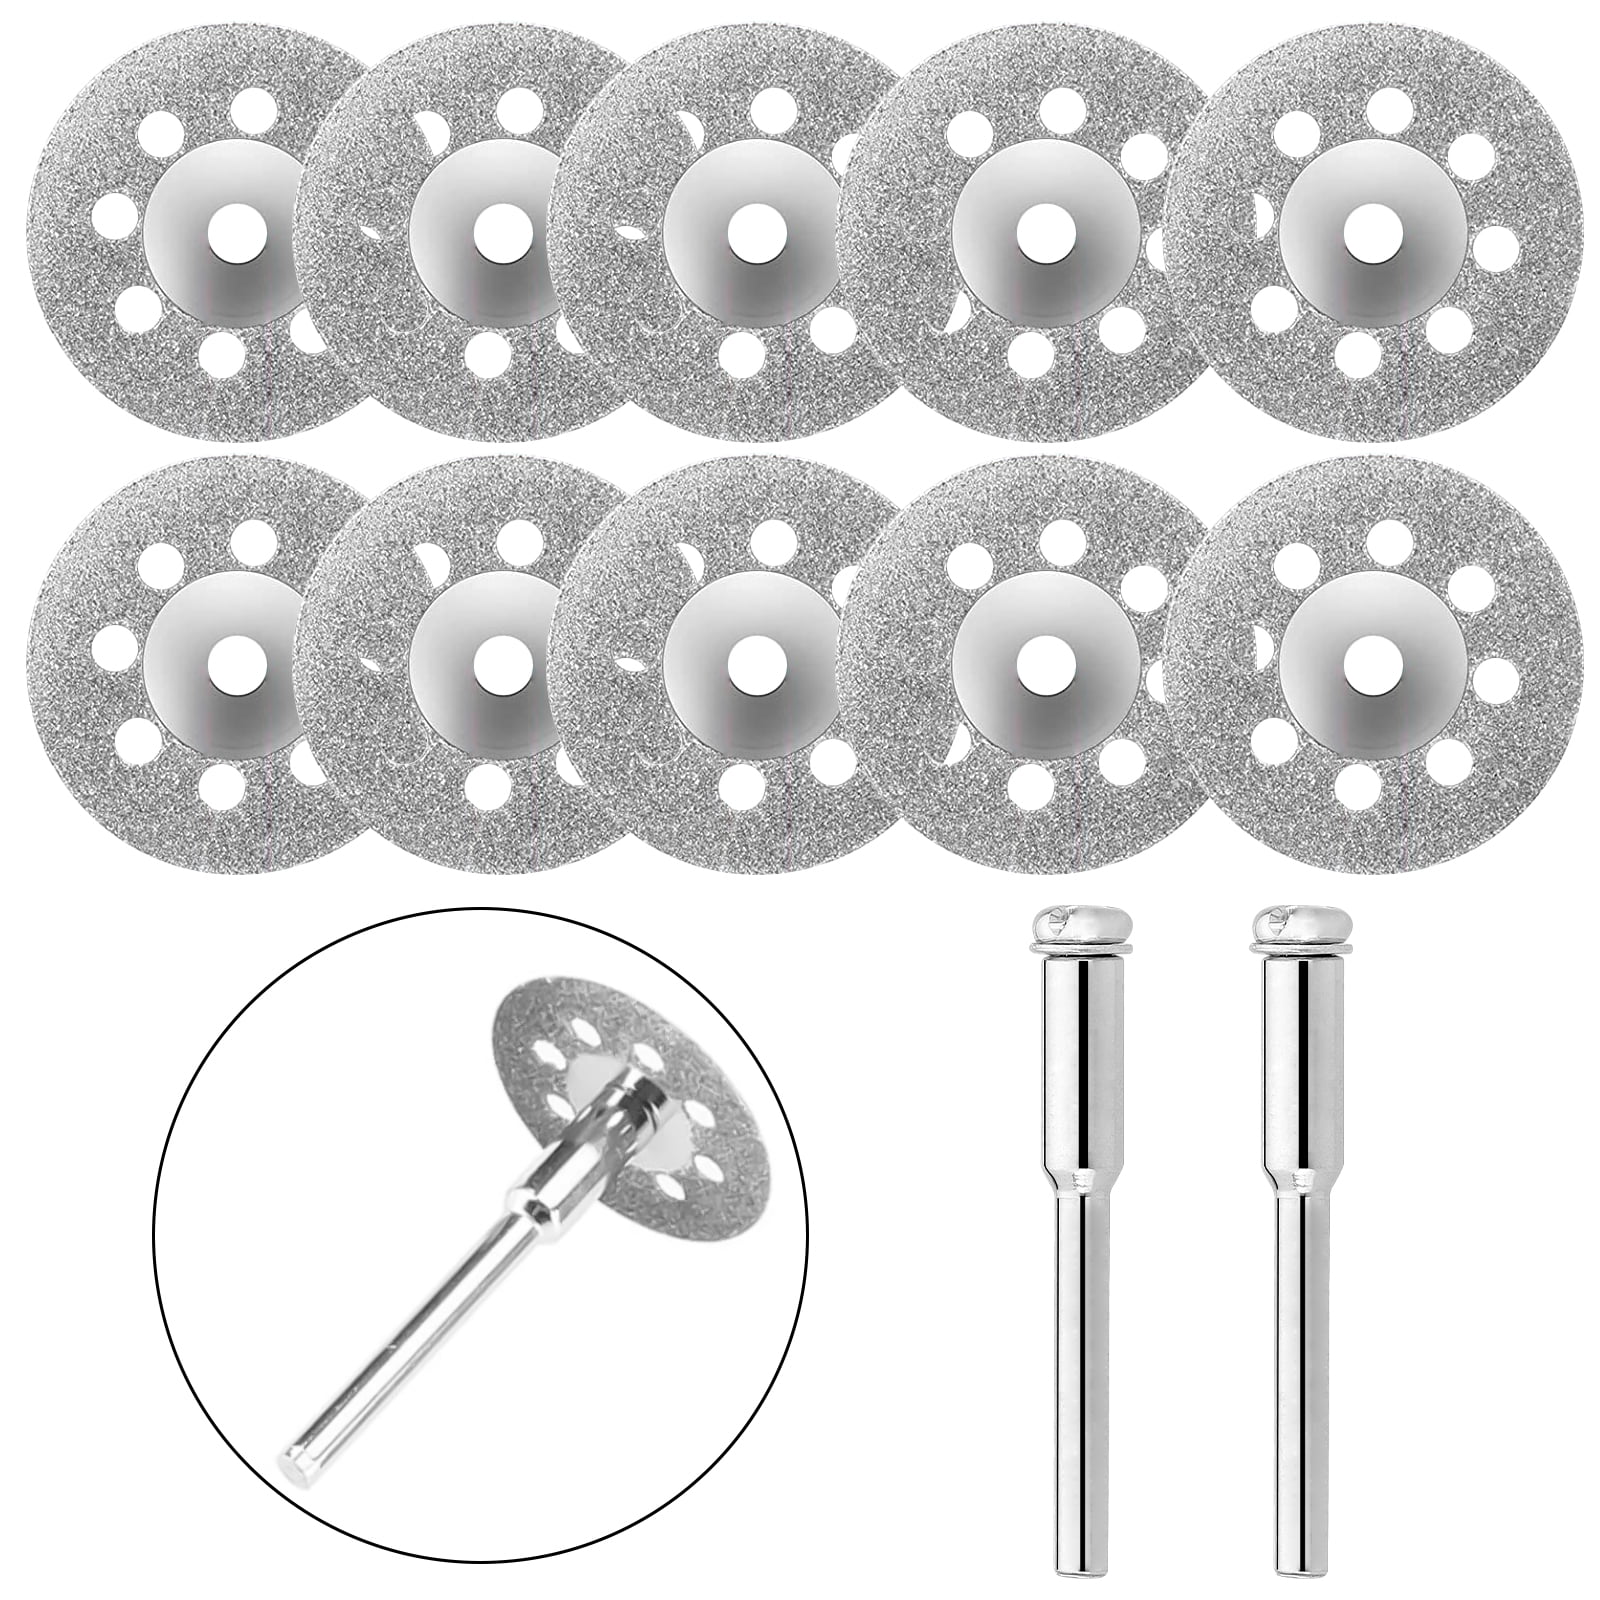 10pcs Diamond Cutting Wheels Dremel Rotary Tool Die Grinder Metal Cut Off Disc 